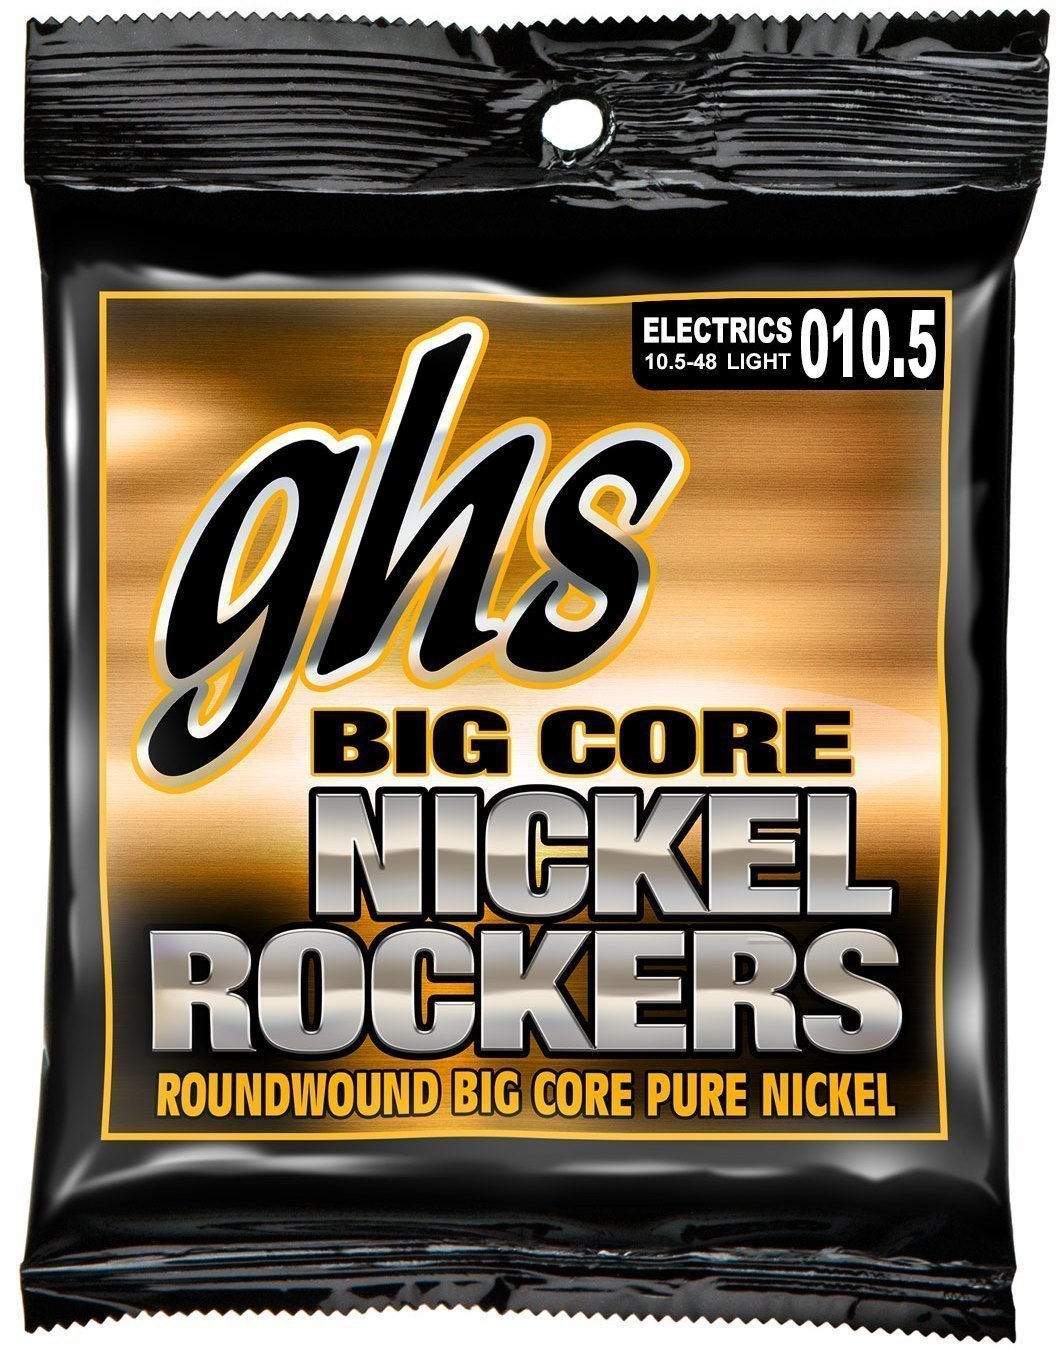 Struny pro elektrickou kytaru GHS Big Core Nickel Rockers 10,5-48